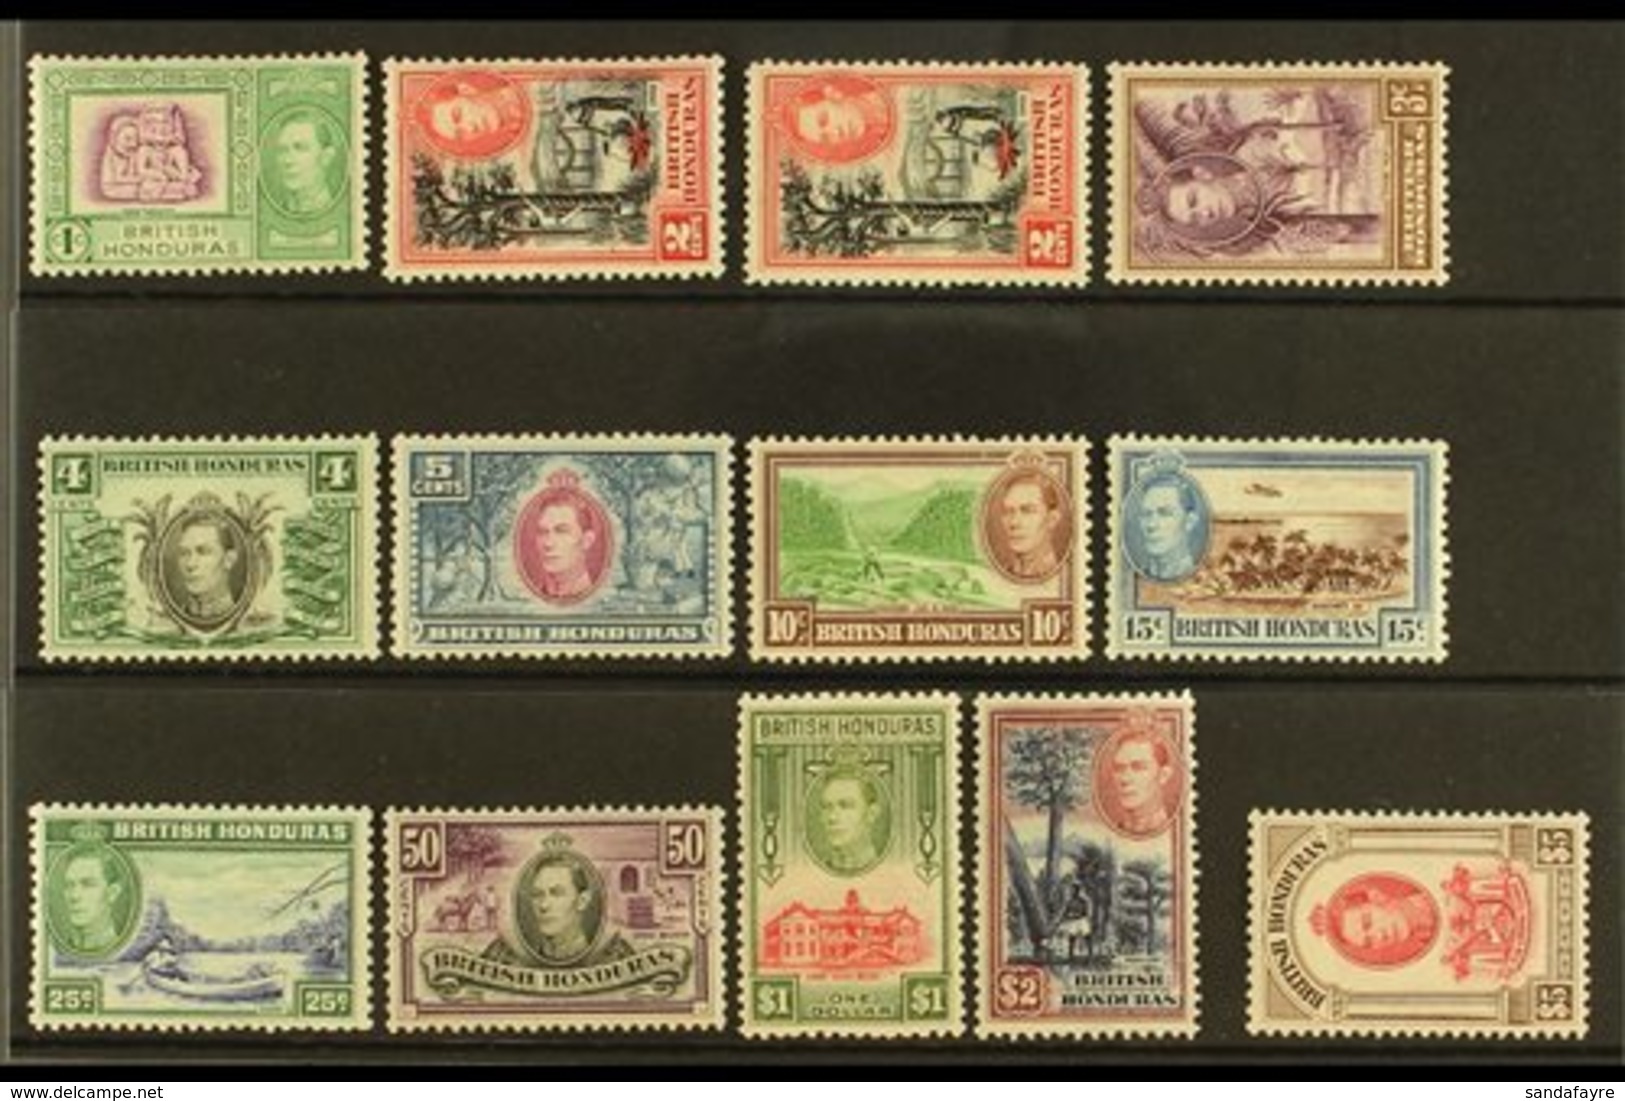 1938-47 Pictorials Complete Set Inc Both 2c Perforation Types, SG 150/61 & 151a, Very Fine Mint, Fresh. (13 Stamps) For  - Honduras Britannique (...-1970)